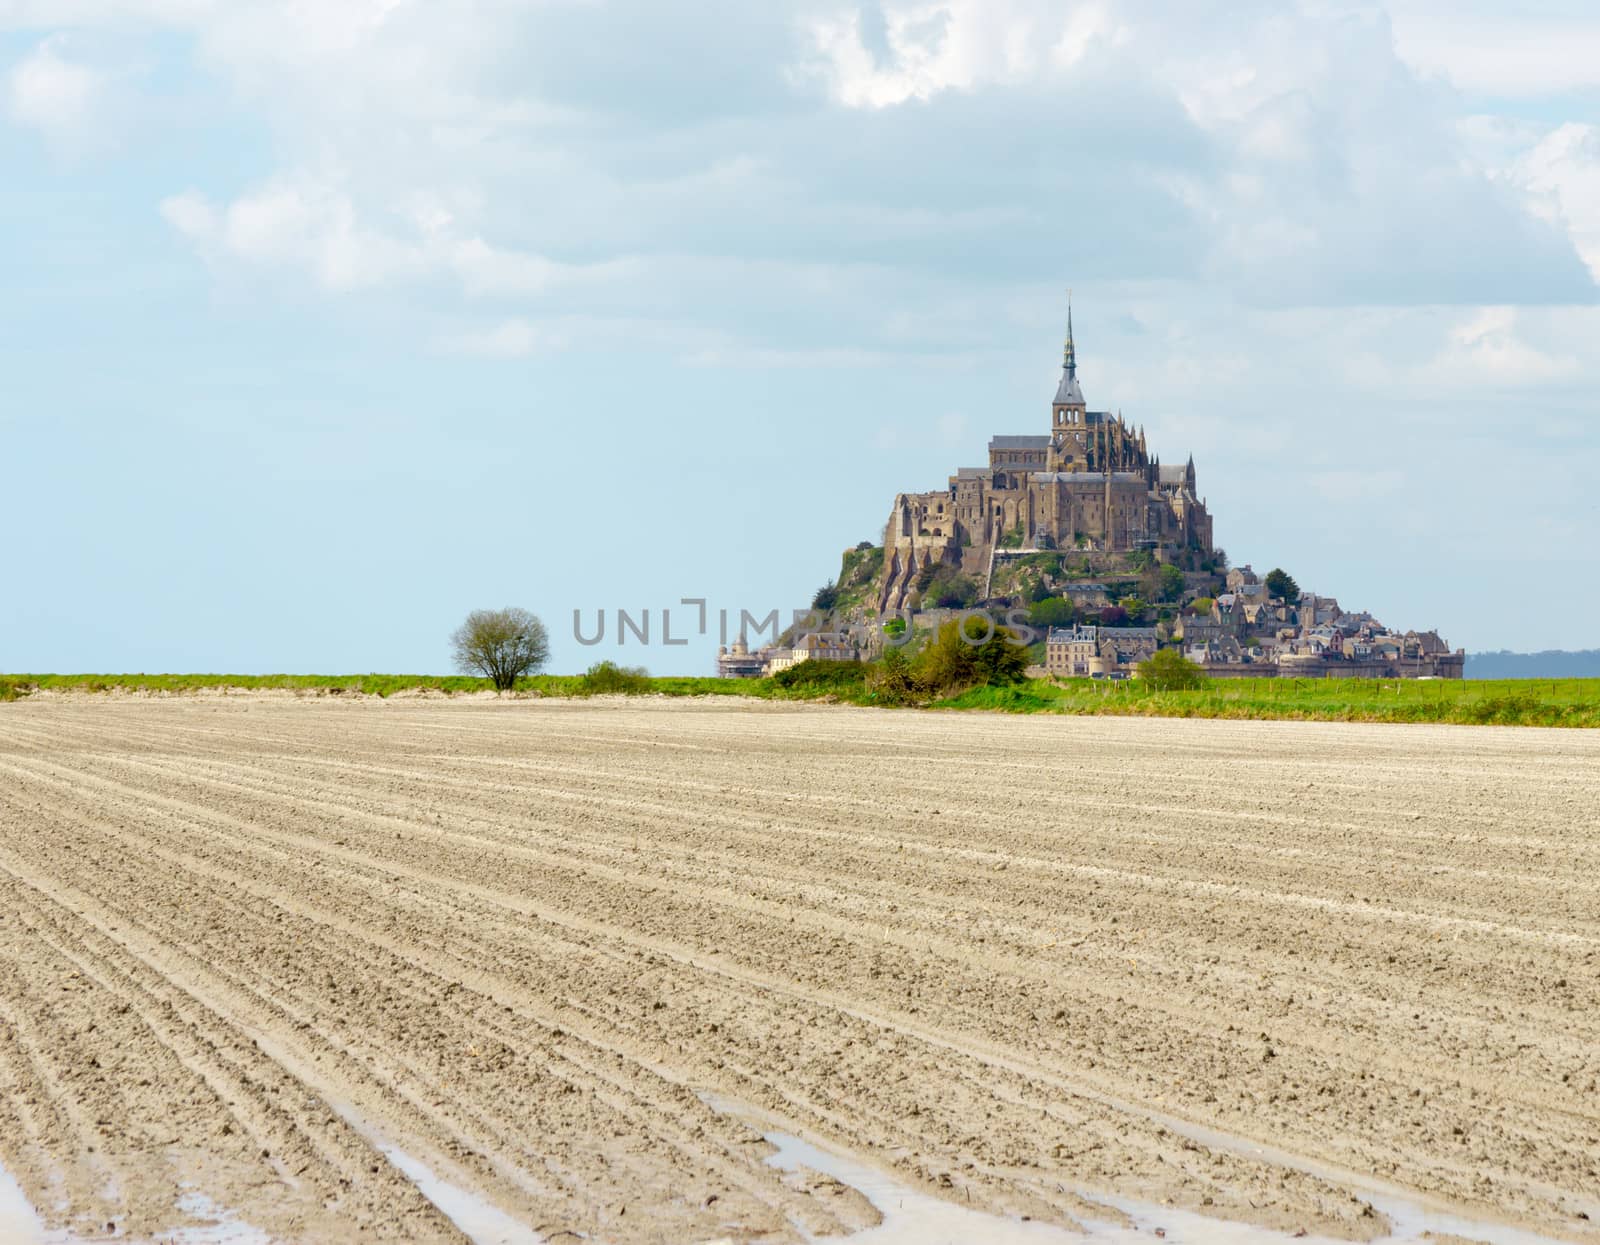 Mont Saint Michel Abbey, Normandy / Brittany, France